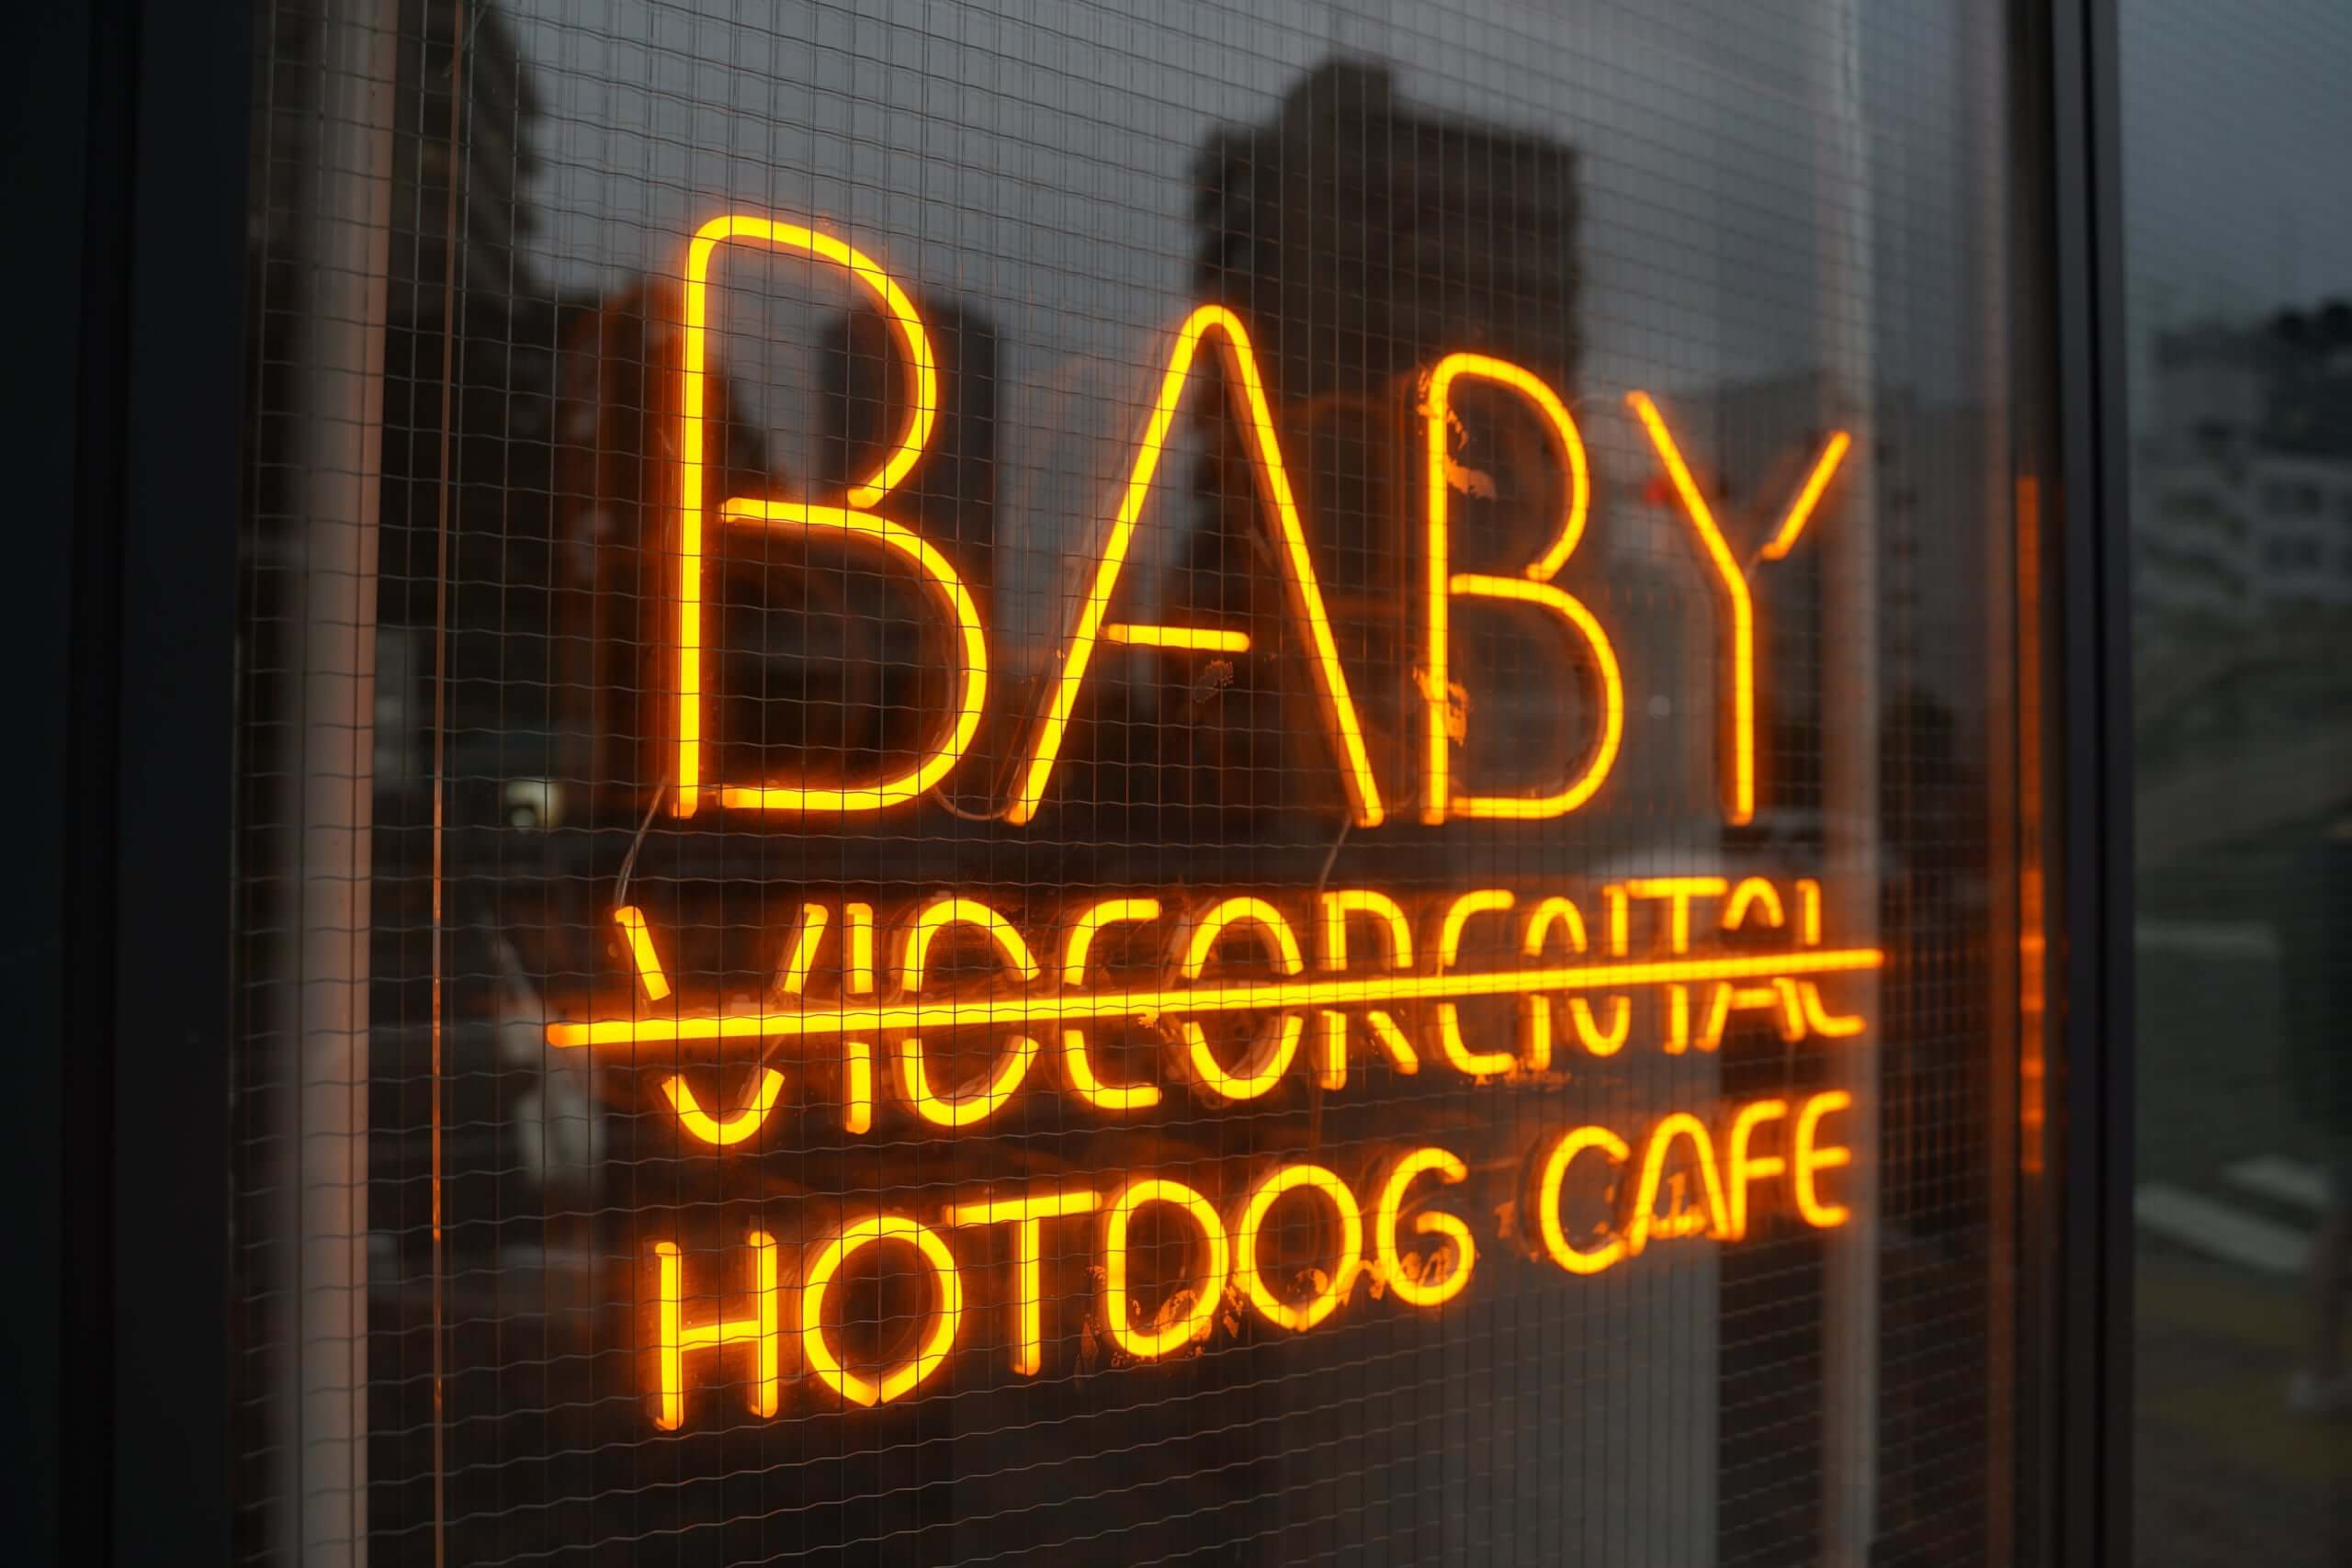 BABY HOTDOG CAFE